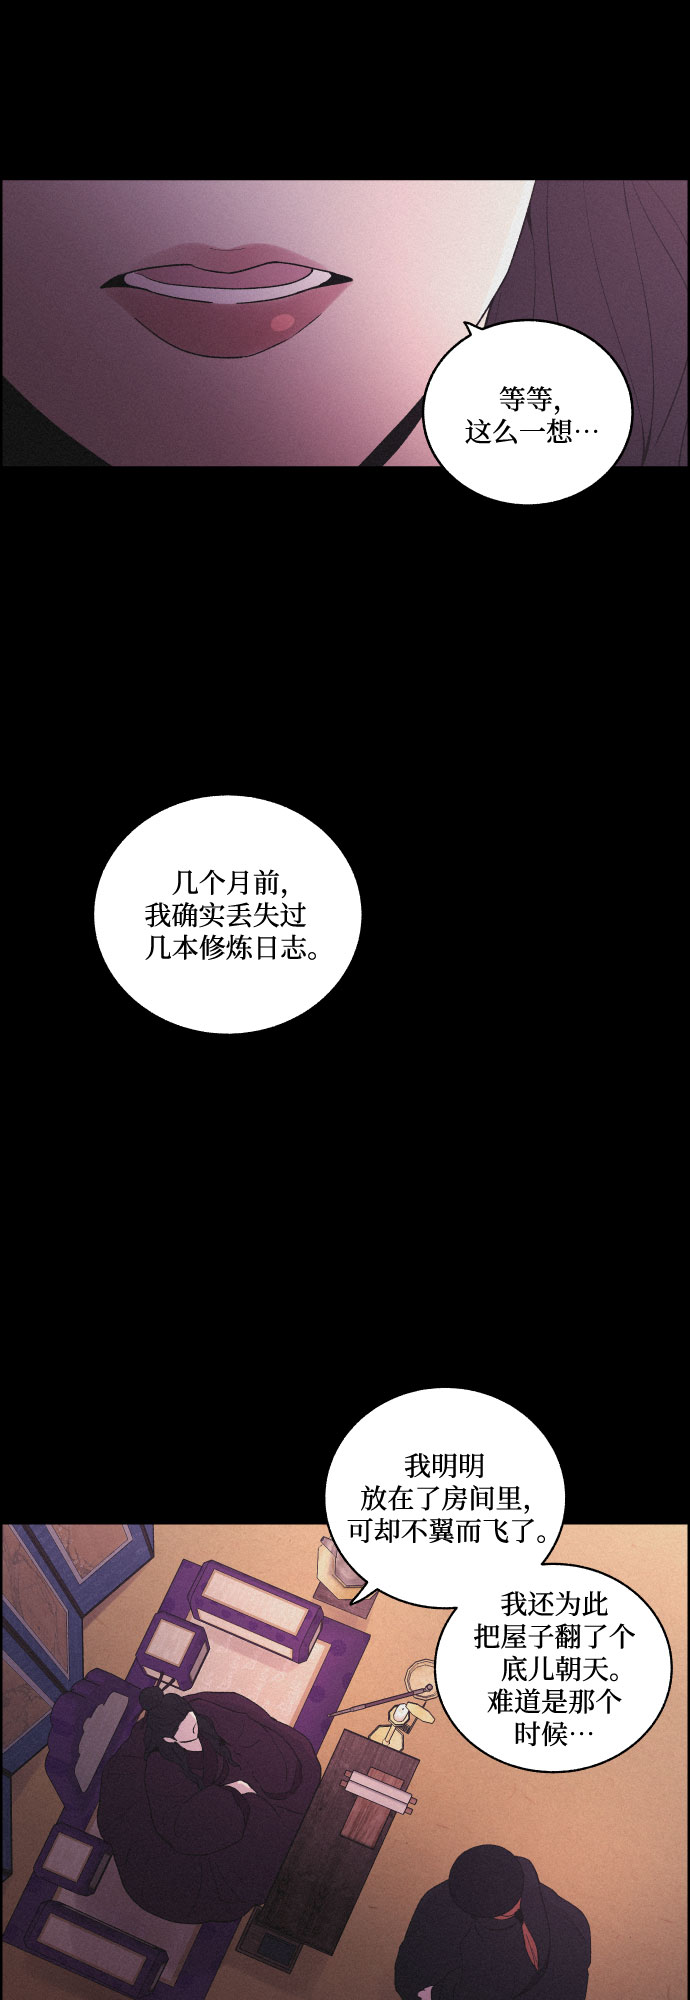 幻像恋歌 - [第50话] 追踪(1/2) - 7